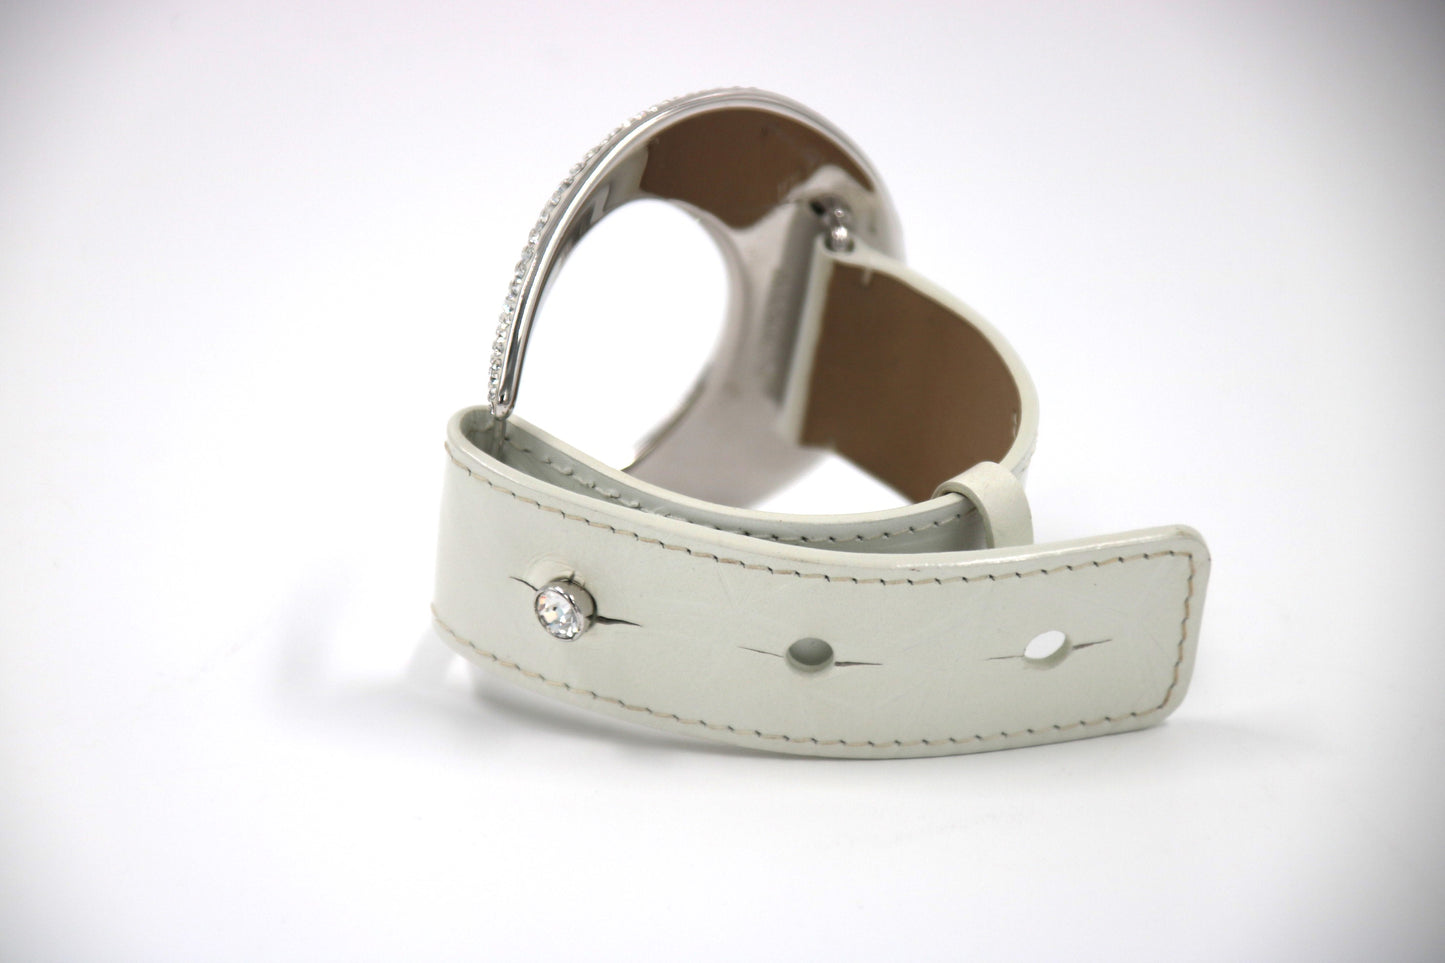 SWAROVSKI White leather Bracelet with Swarovski embellished brooch